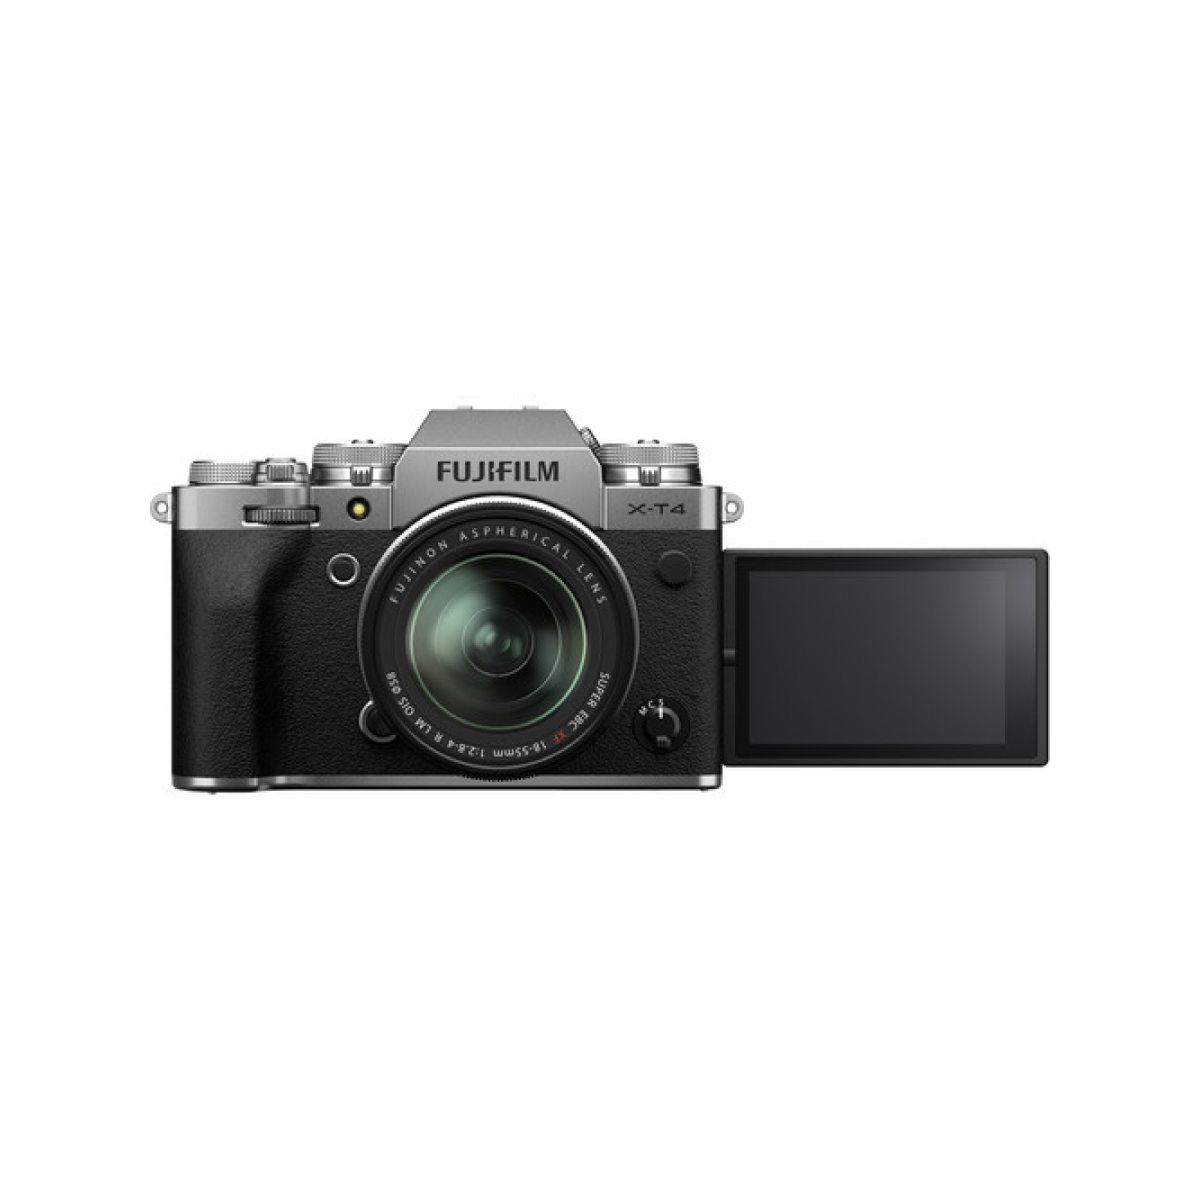 Fujifilm X-T4 26MP Mirrorless Camera Body with XF18-55mm Lens – Silver (8)